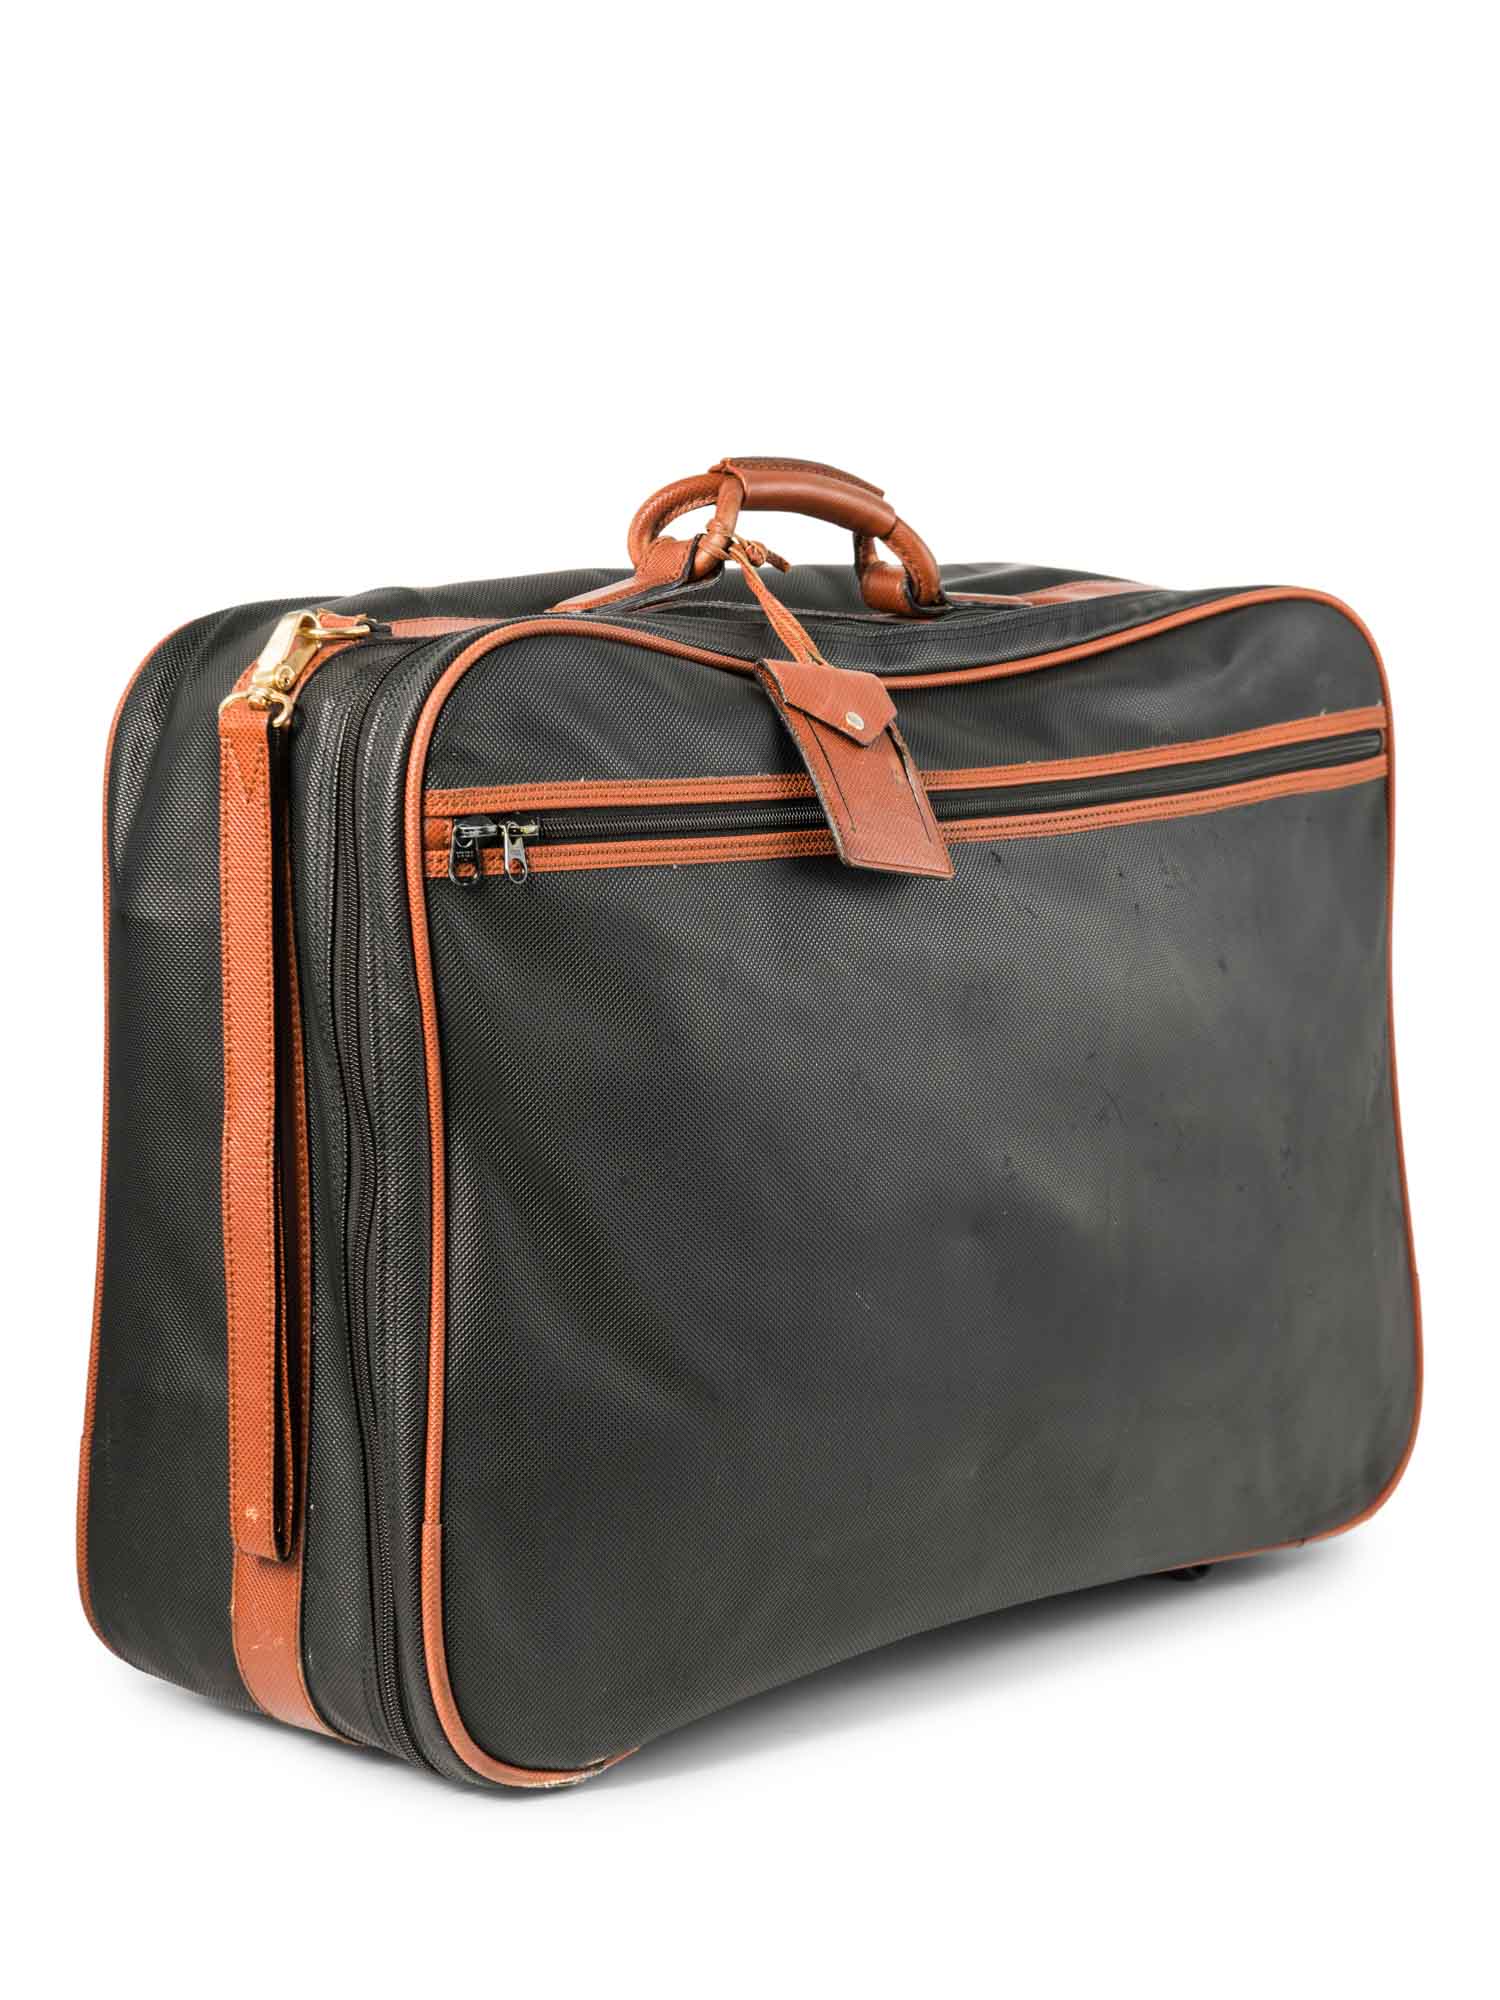 Bottega Veneta Leather Soft Luggage Suitcase Black Brown